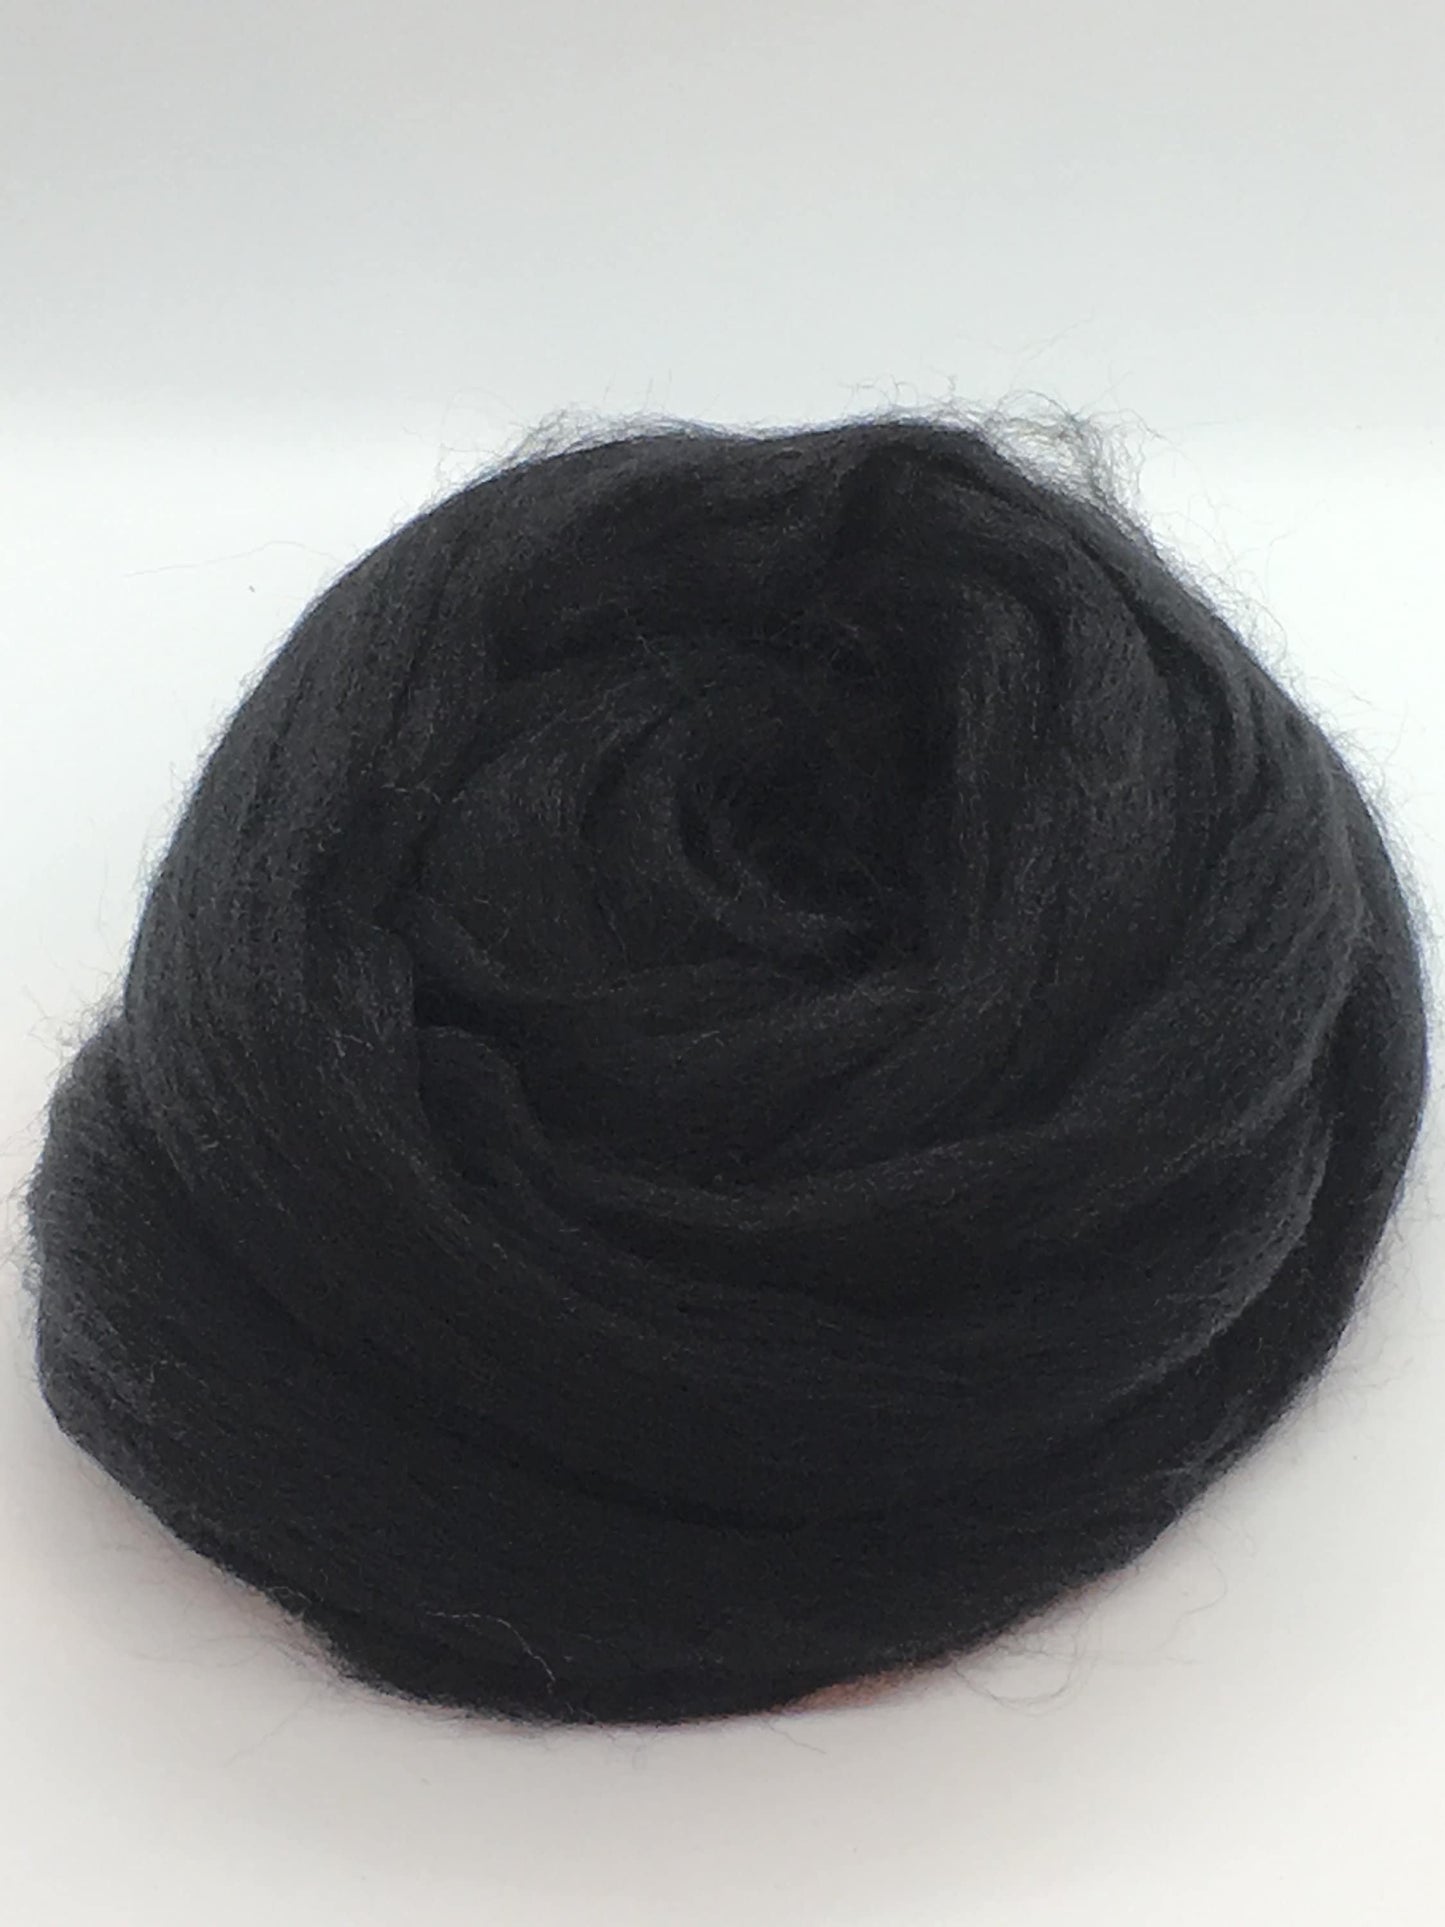 Australian Merino Wool Top Roving Fiber